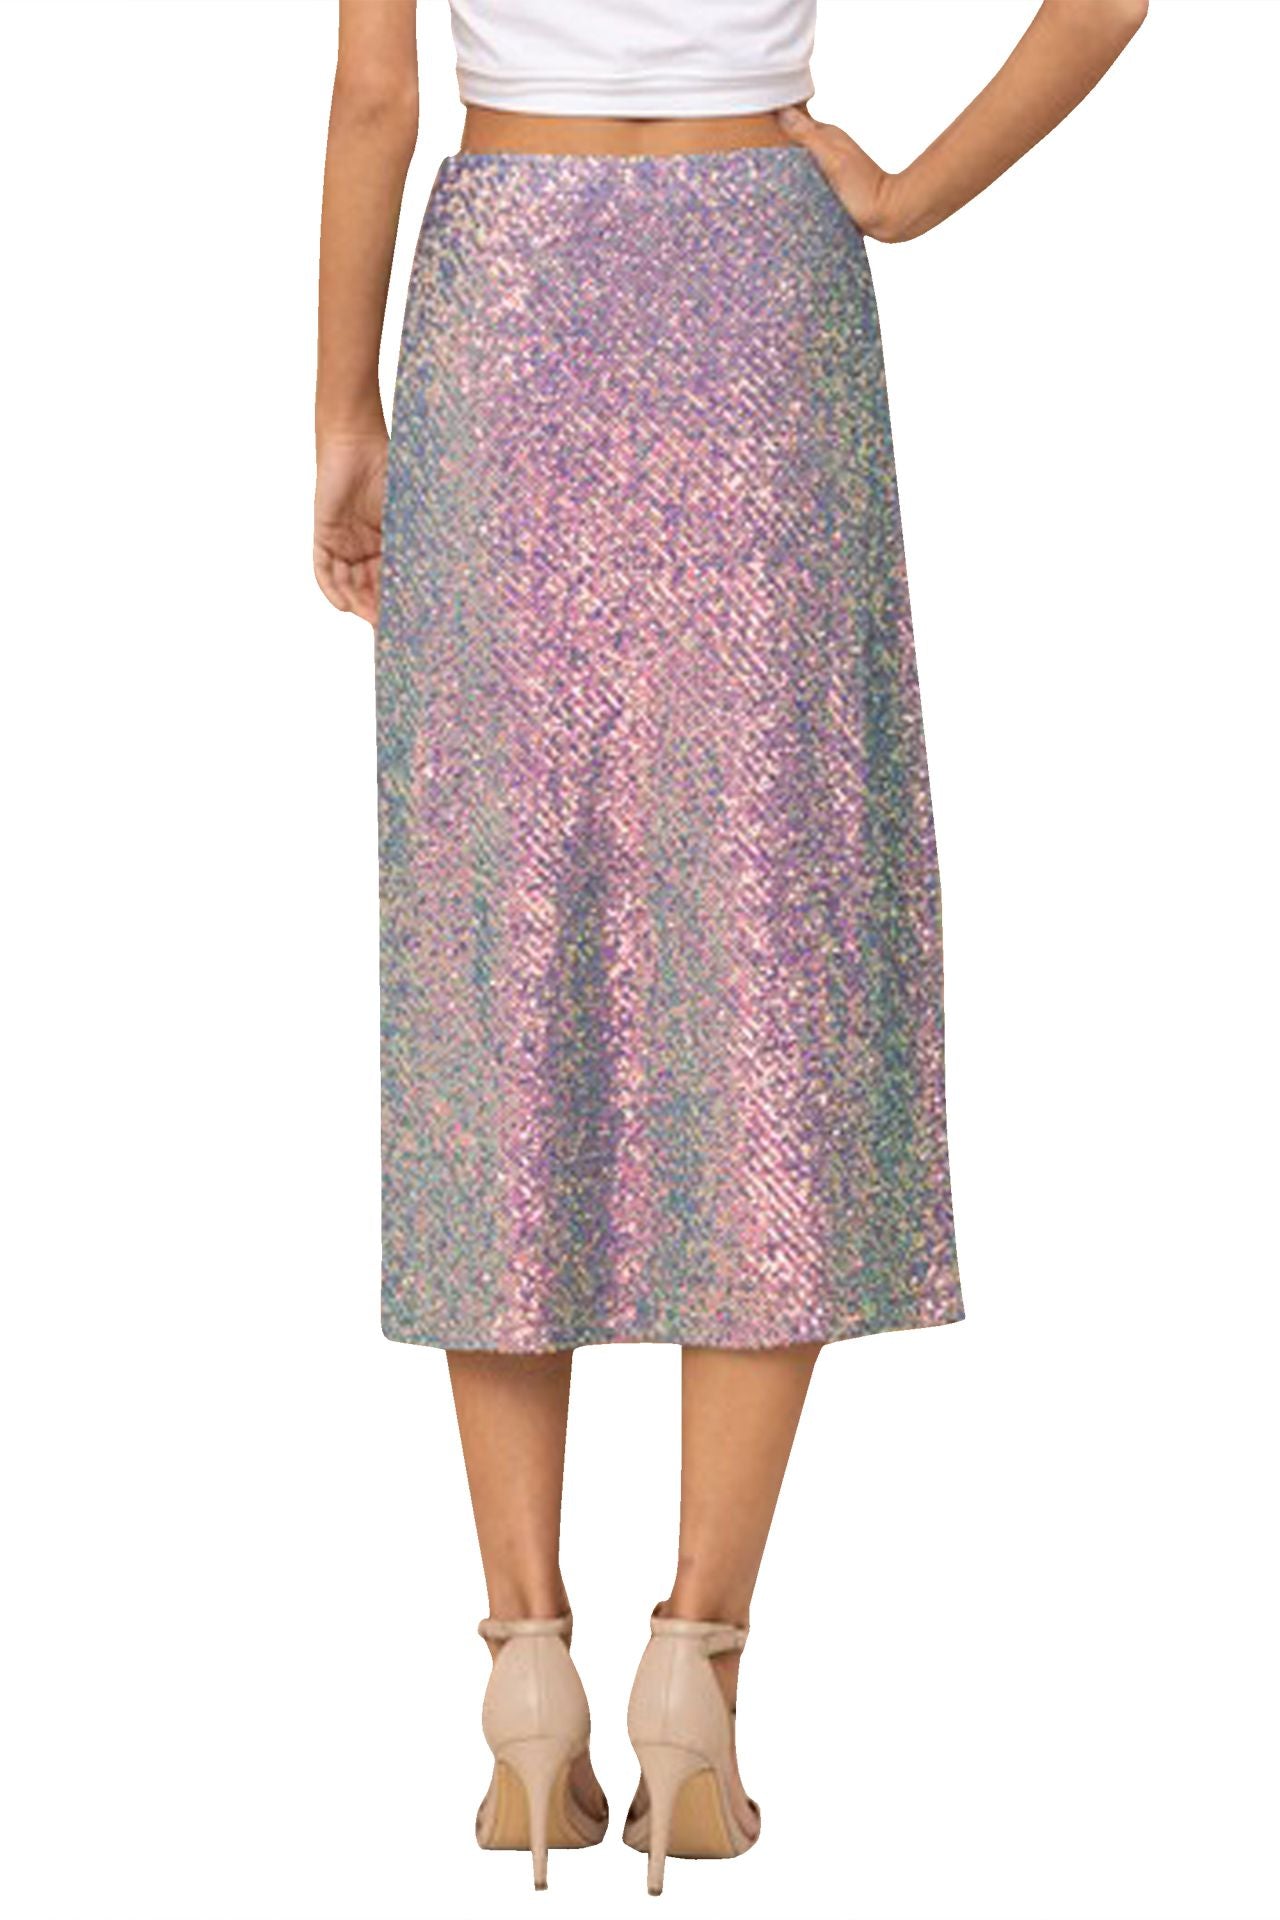 "Kyle X Shahida" "lavender sequin skirt" "purple sequin midi skirt" "purple sequin skirt" "sequin purple skirt"